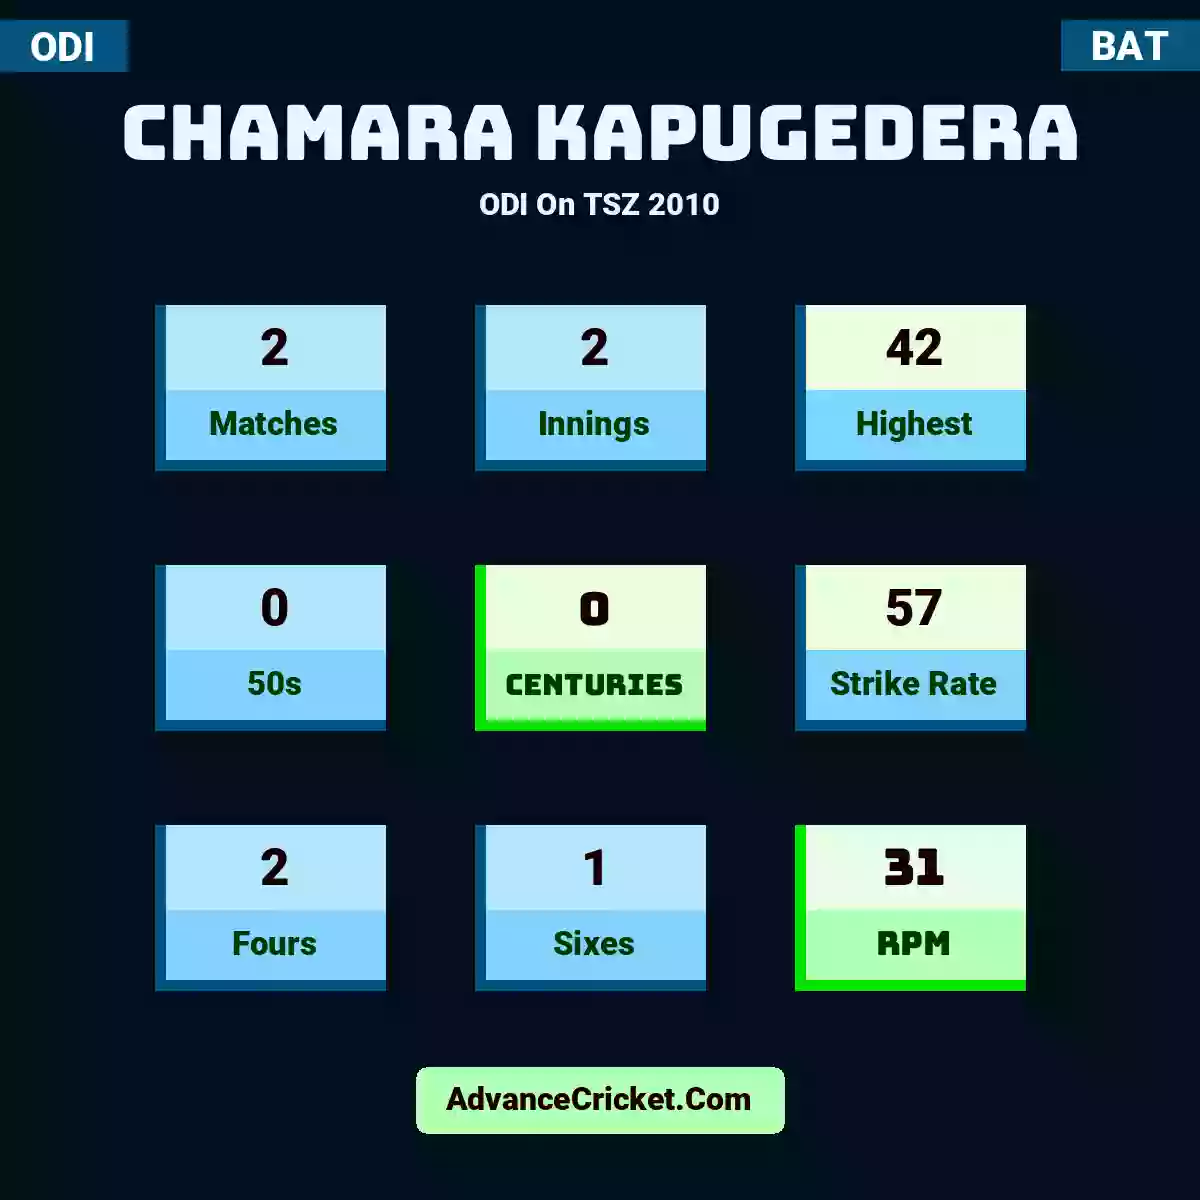 Chamara Kapugedera ODI  On TSZ 2010, Chamara Kapugedera played 2 matches, scored 42 runs as highest, 0 half-centuries, and 0 centuries, with a strike rate of 57. C.Kapugedera hit 2 fours and 1 sixes, with an RPM of 31.